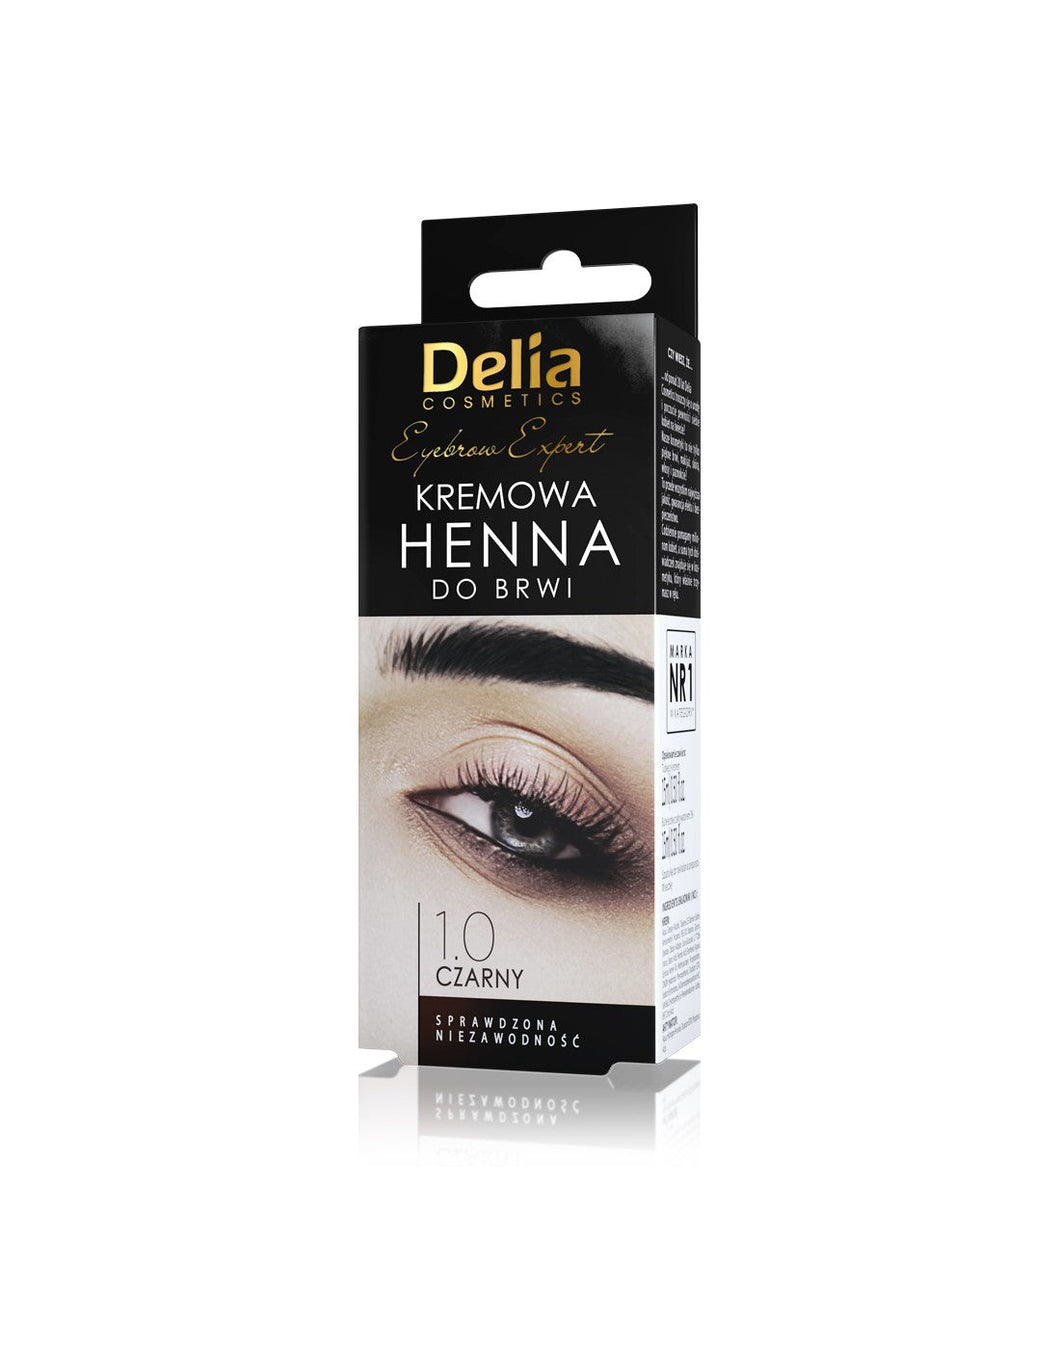 Delia Cream  Henna for Eyebrows 1.0 Black  15ml